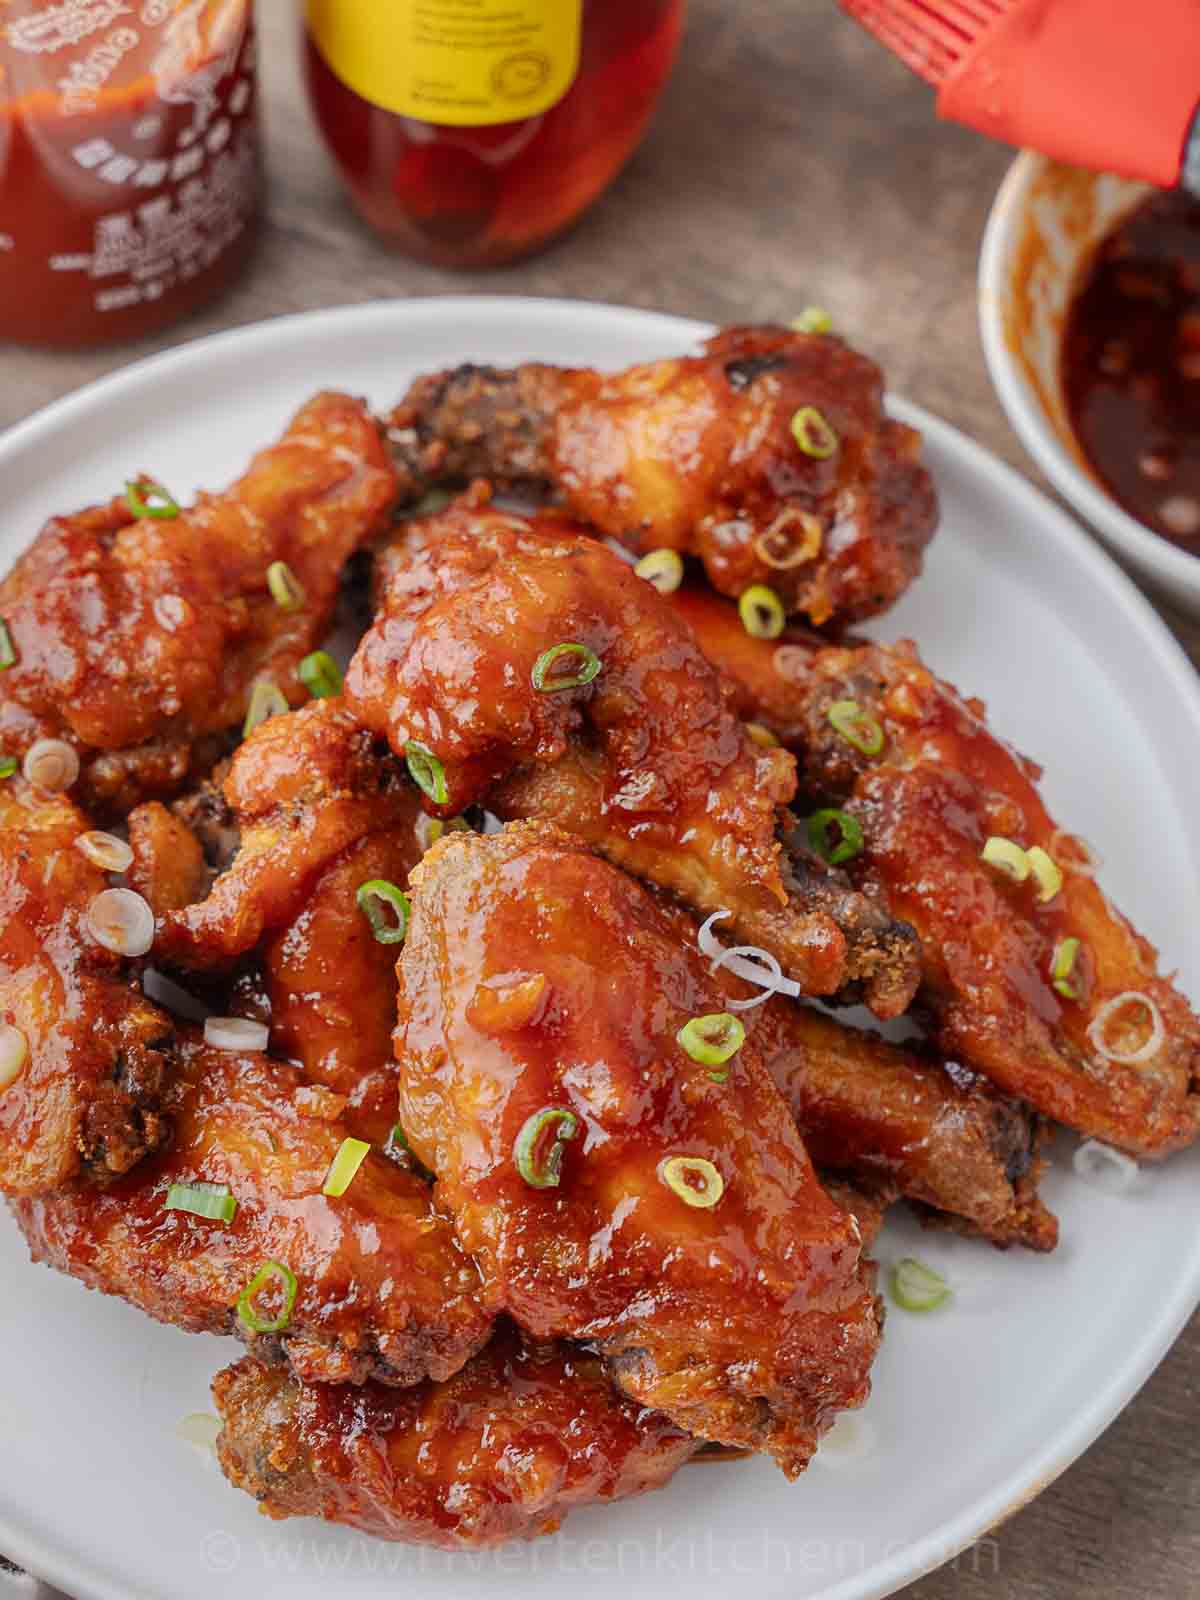 crispy chicken wings coated in honey sriracha sauce.